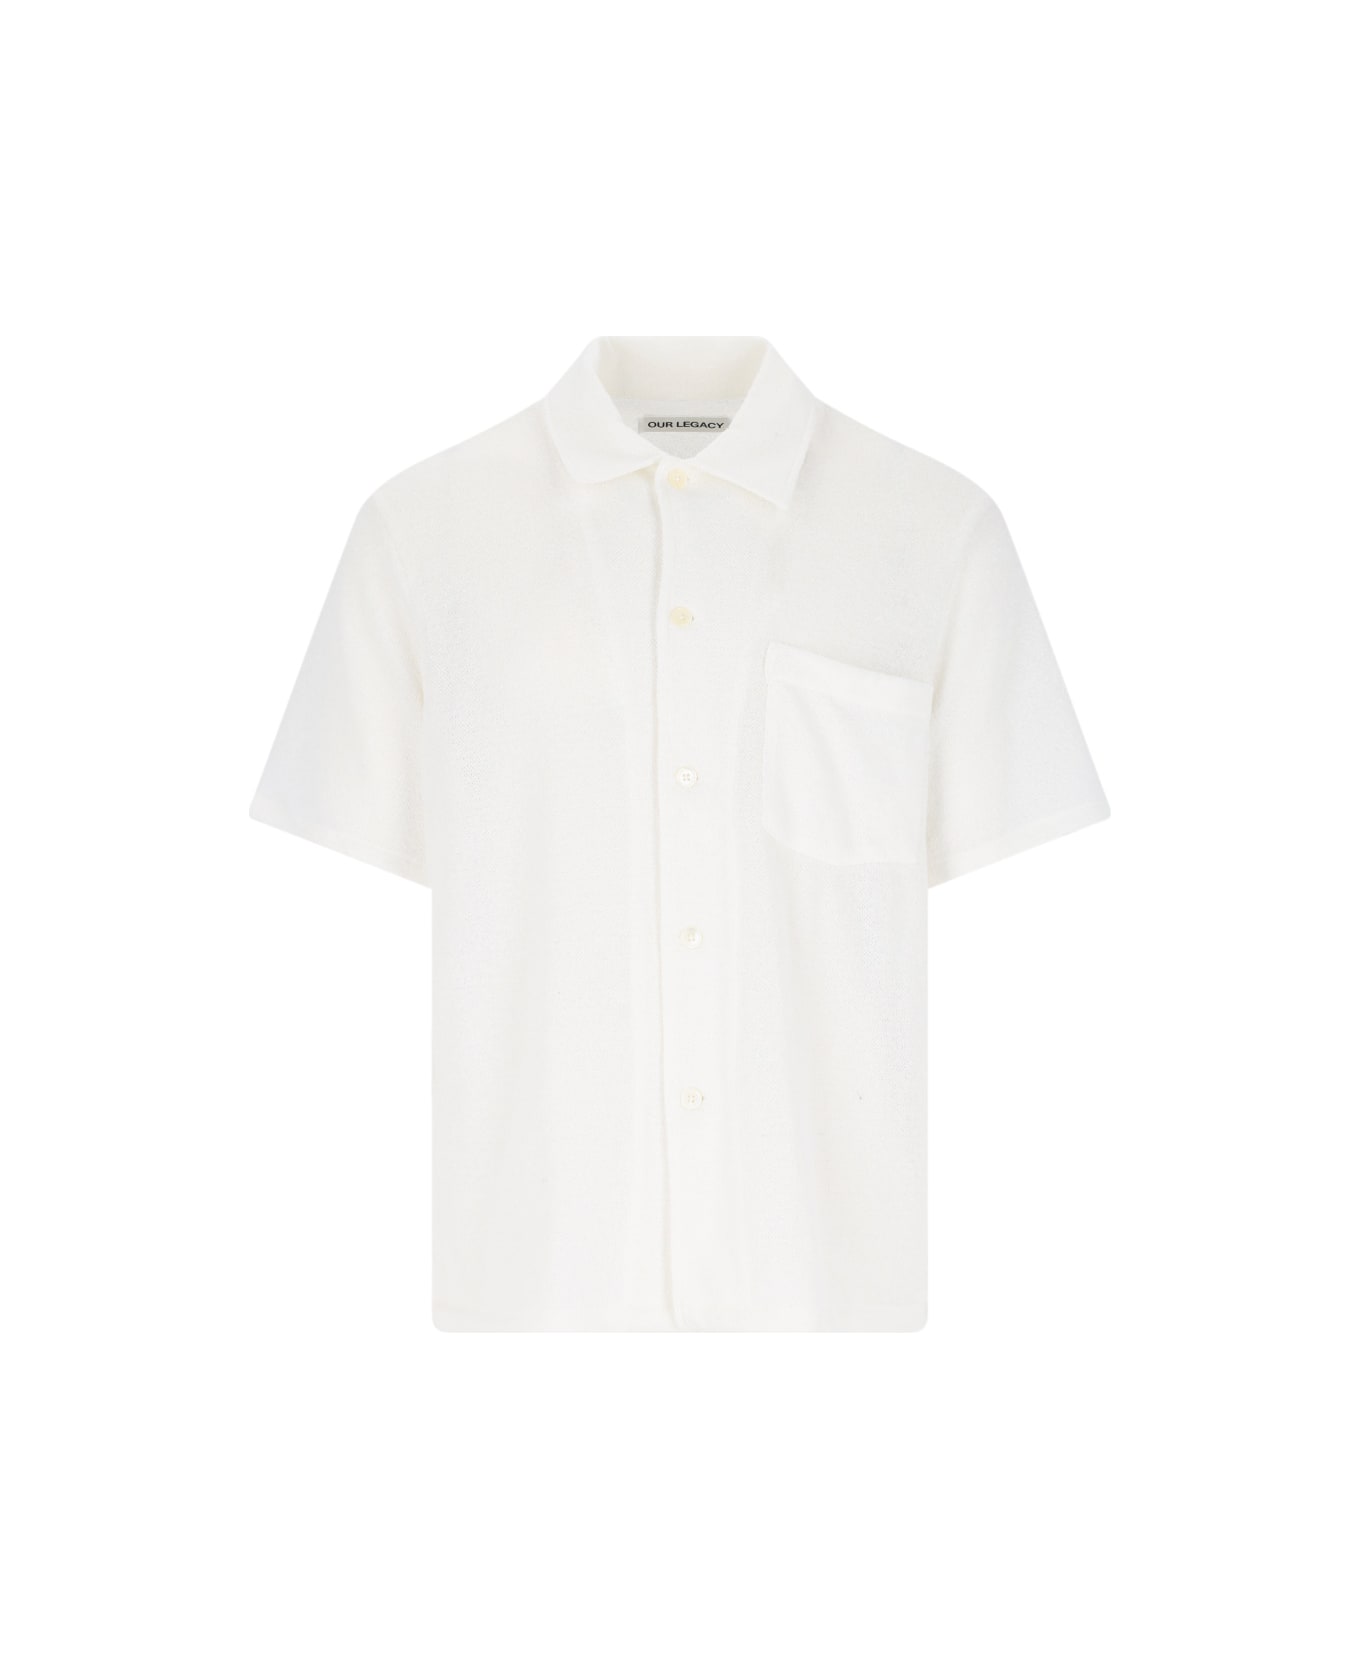 Our Legacy Basic Shirt - White シャツ